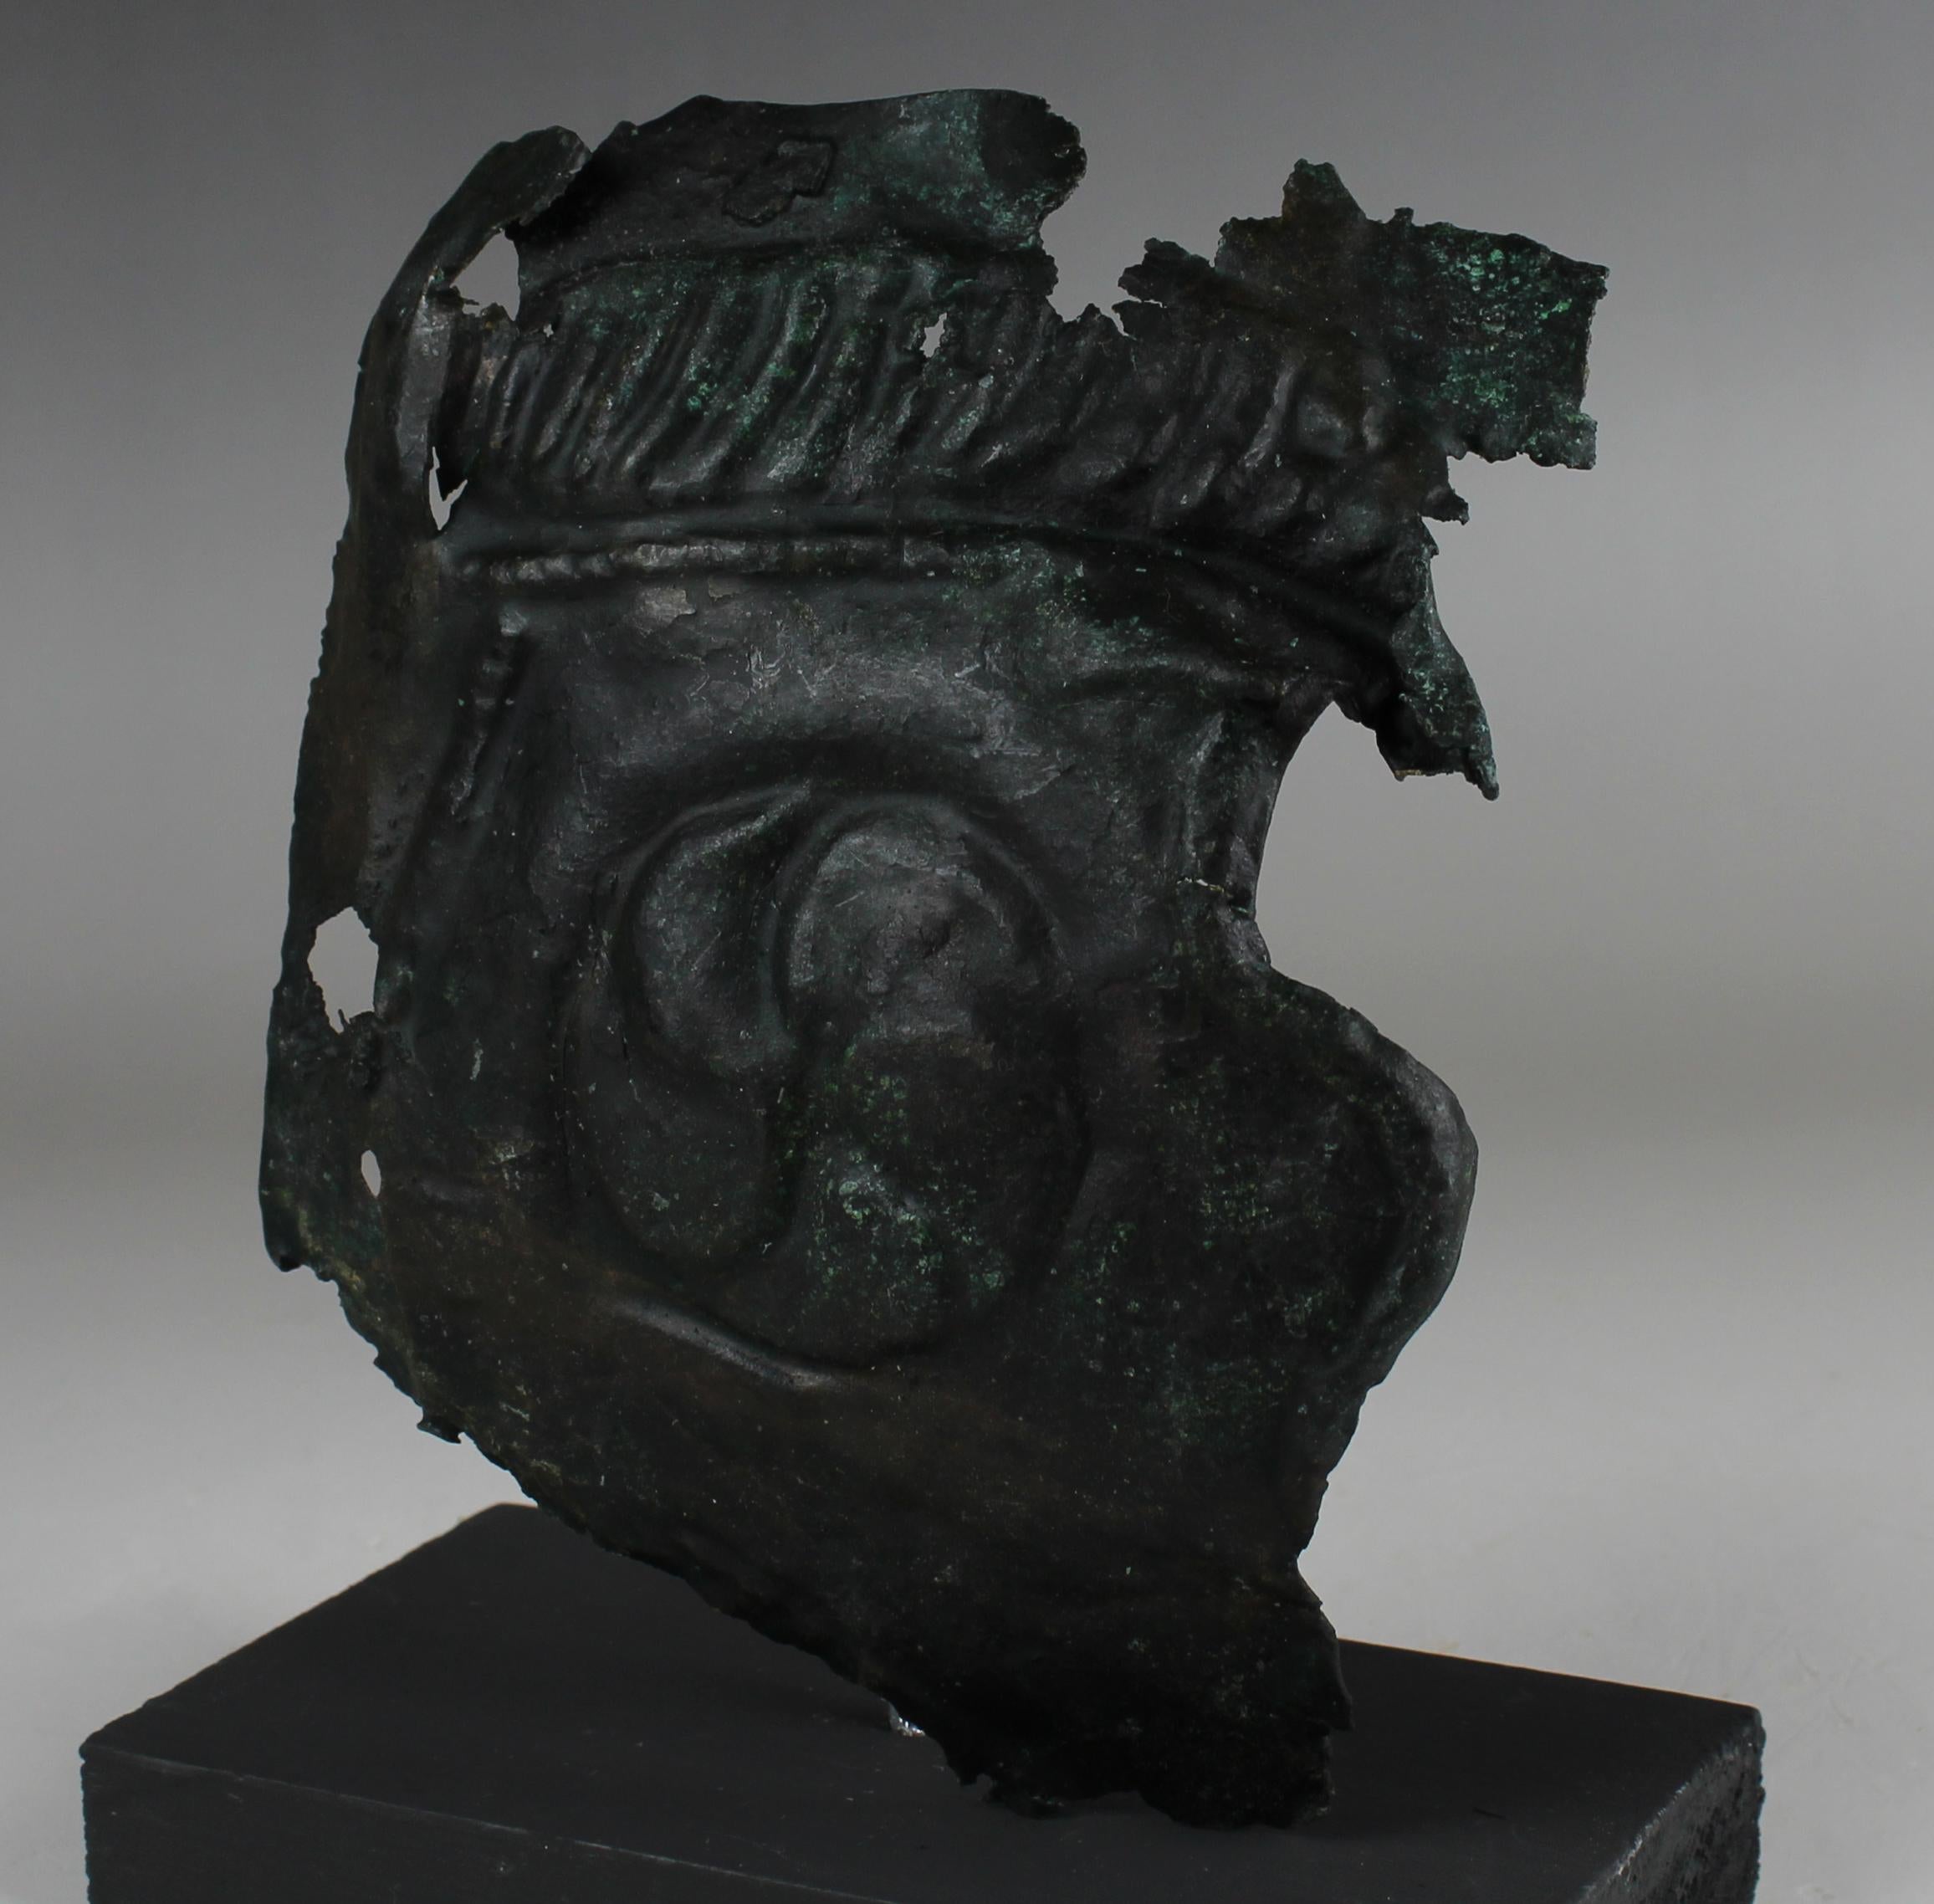 Italian Roman military cheek piece of a helmet fragment with shield ornament